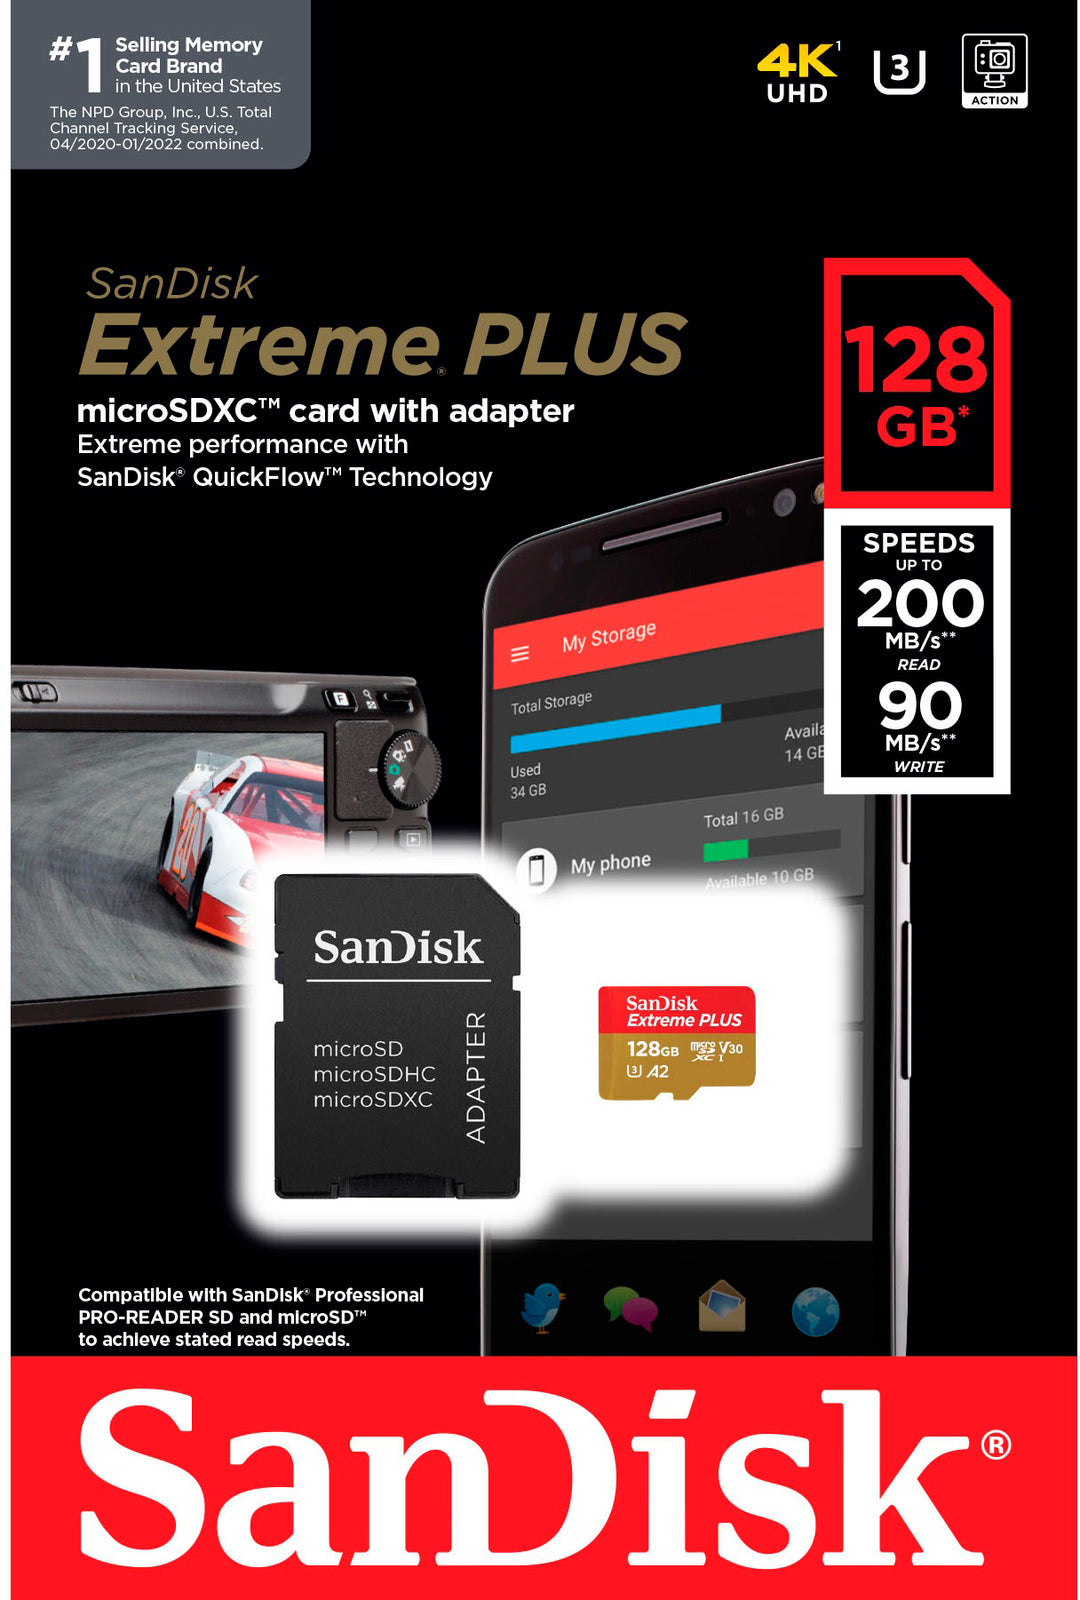 SanDisk - Extreme PLUS 128GB MicroSDXC UHS-I Memory Card_1